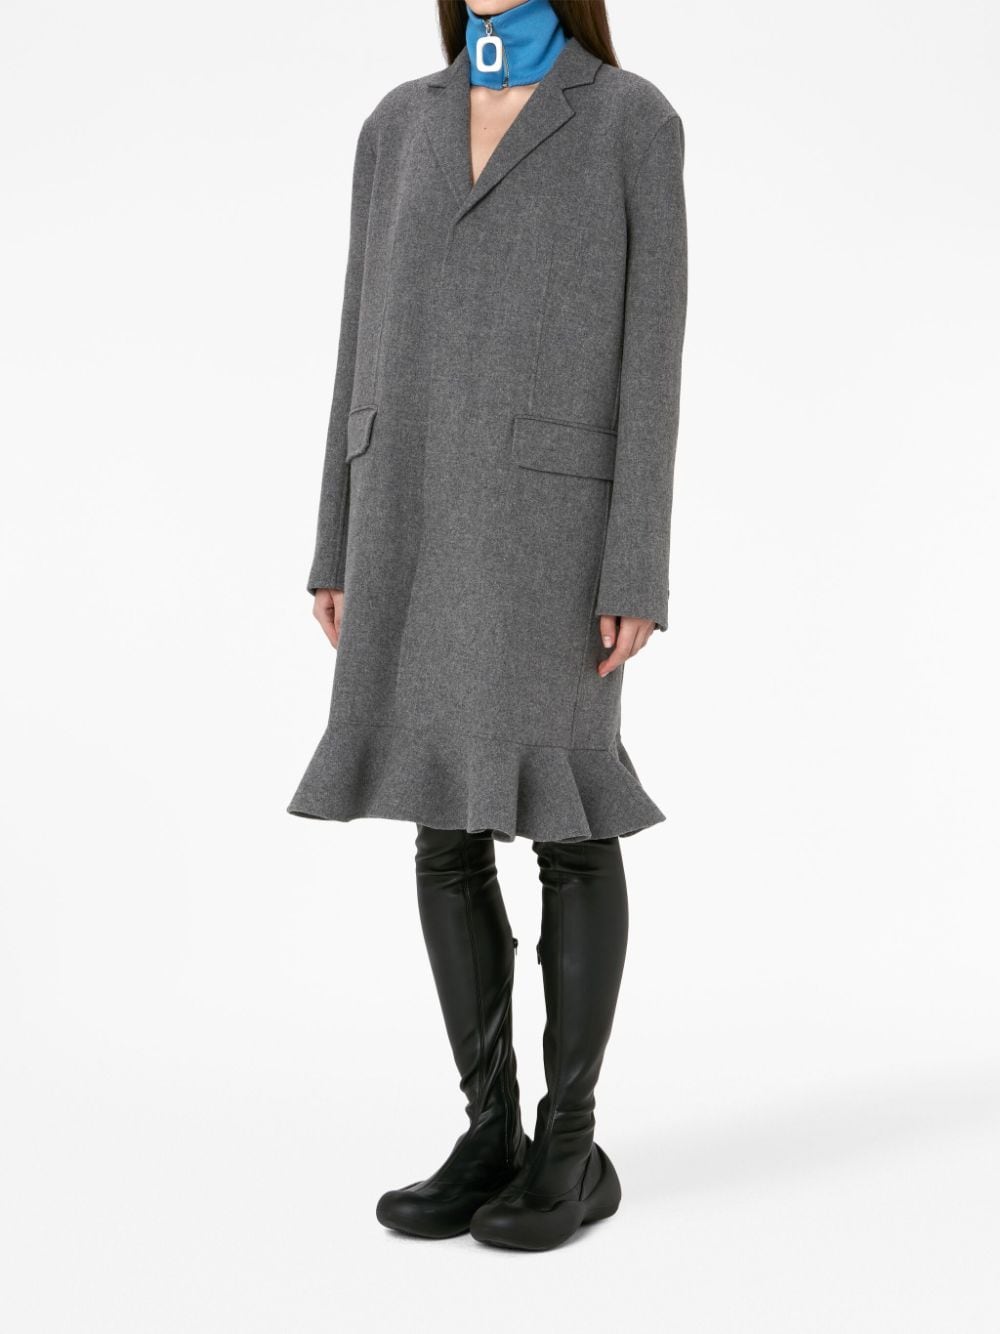 JW ANDERSON Elegant Grey Wool Jacket for Stylish Women - FW23 Collection